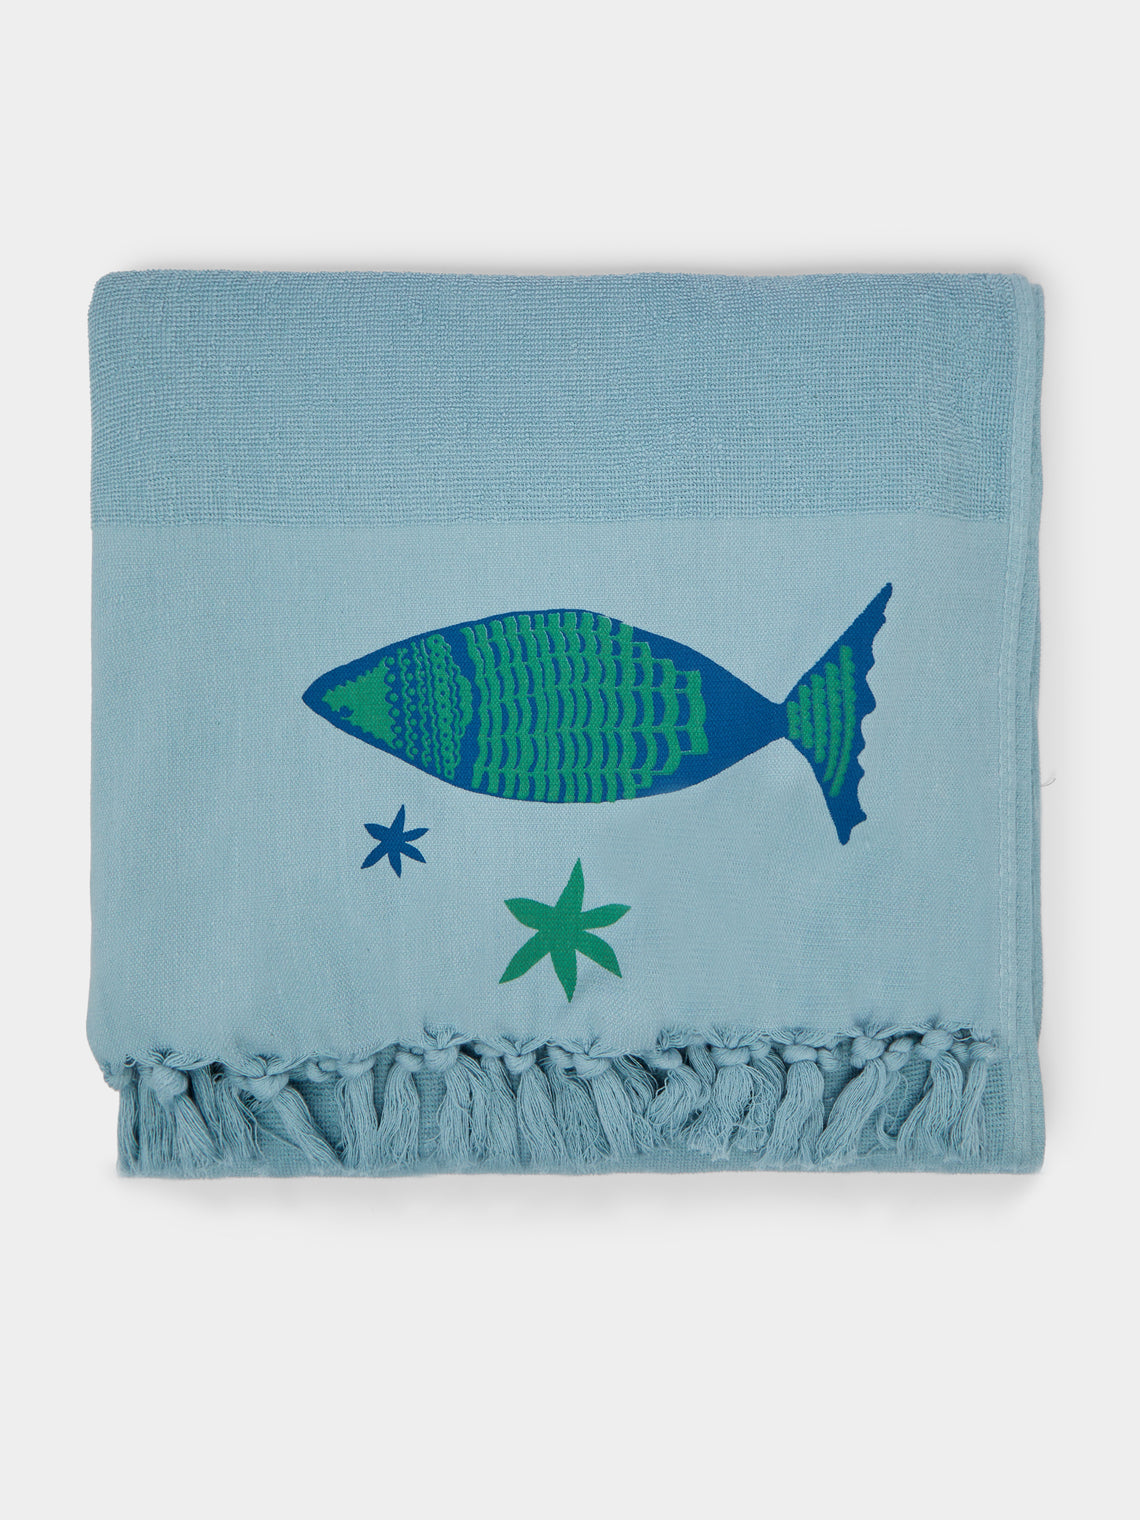 Malaika - Big Fish Hand-Printed Cotton Beach Towels (Set of 2) -  - ABASK - 